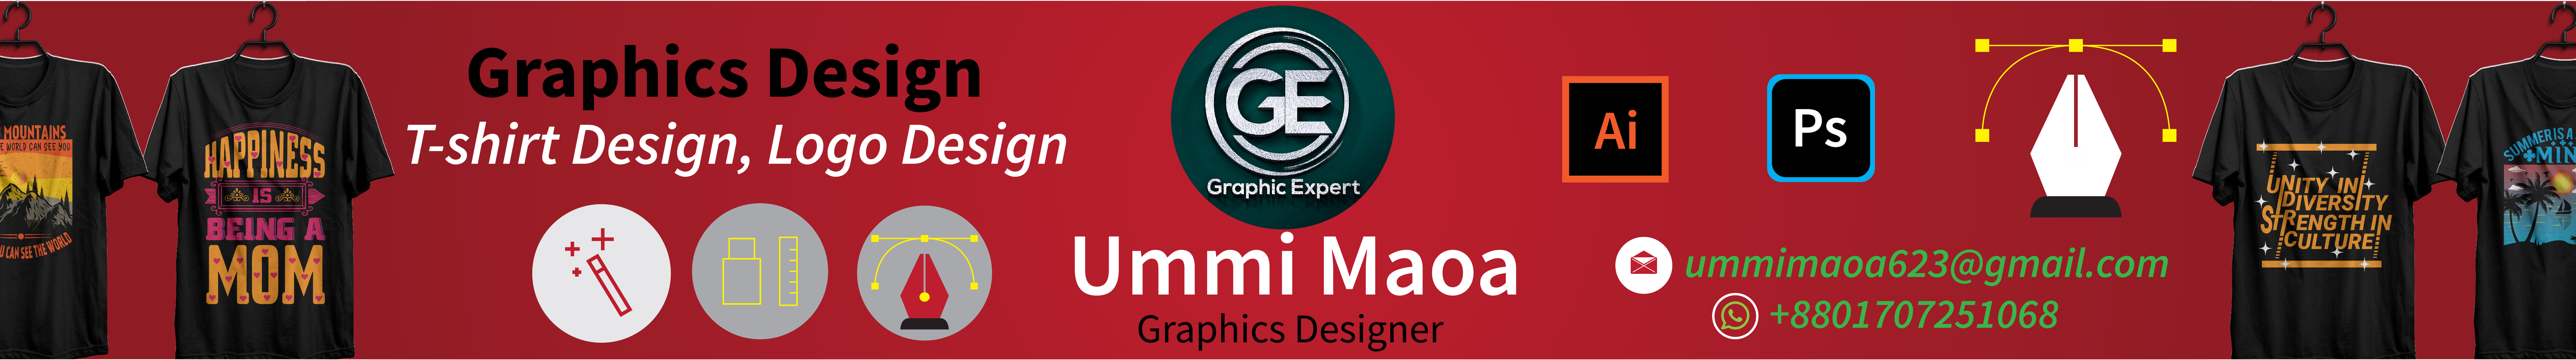 UMMI MAOA's profile banner